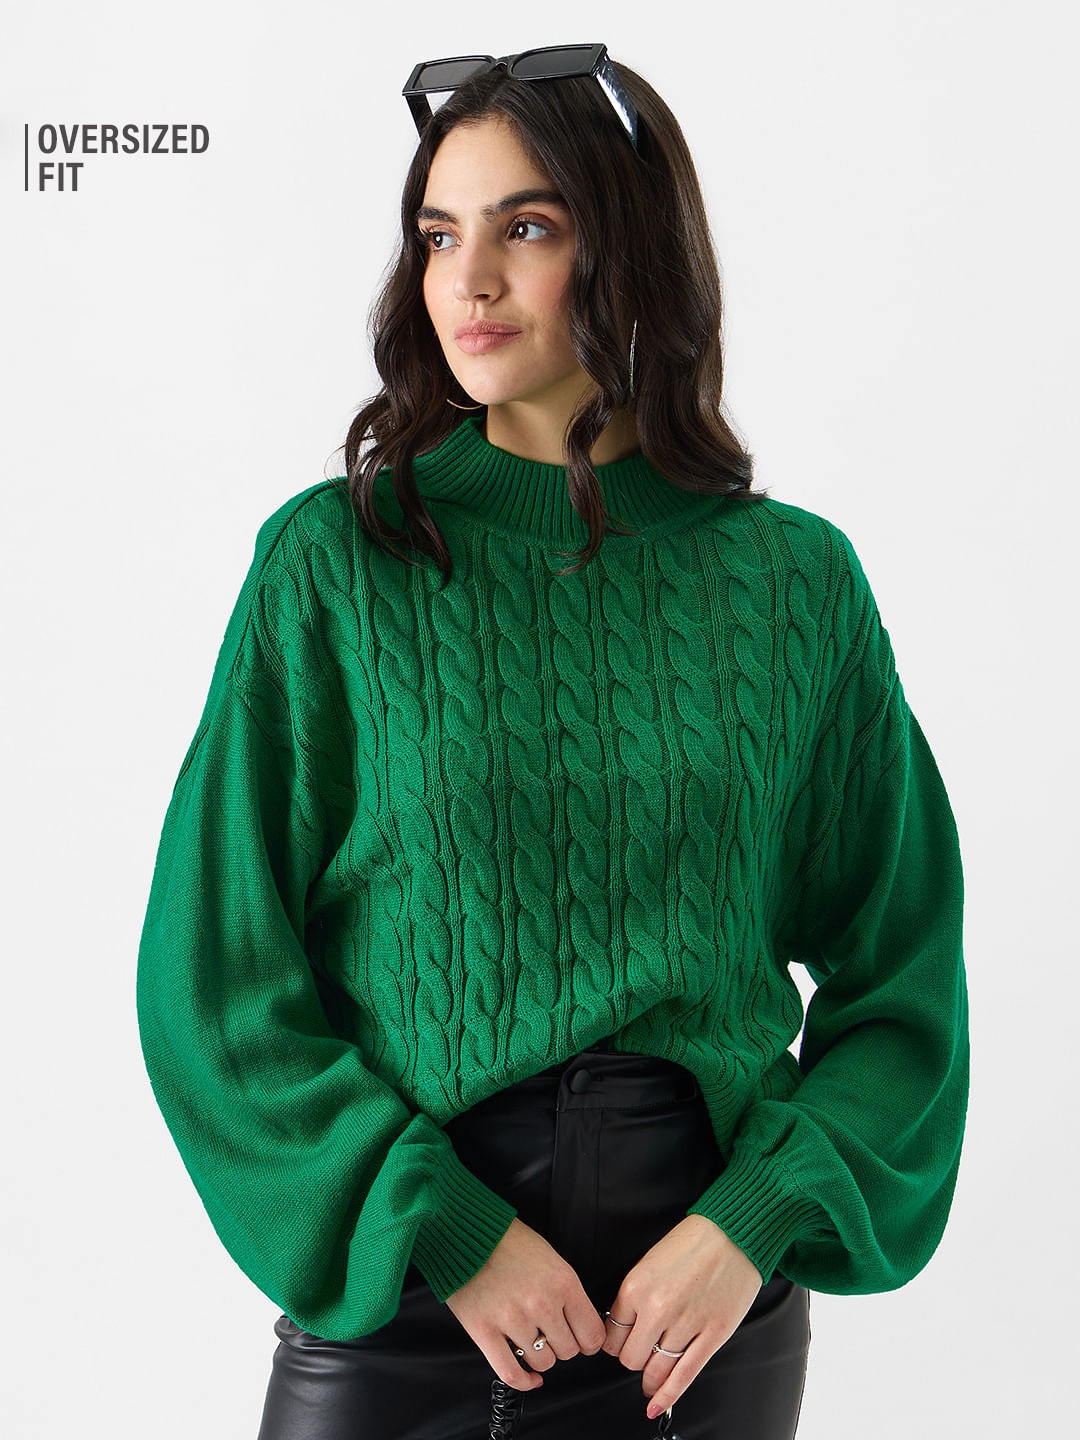 The Souled Store | Women's Solids: Kelly Green Women's Oversized Sweaters